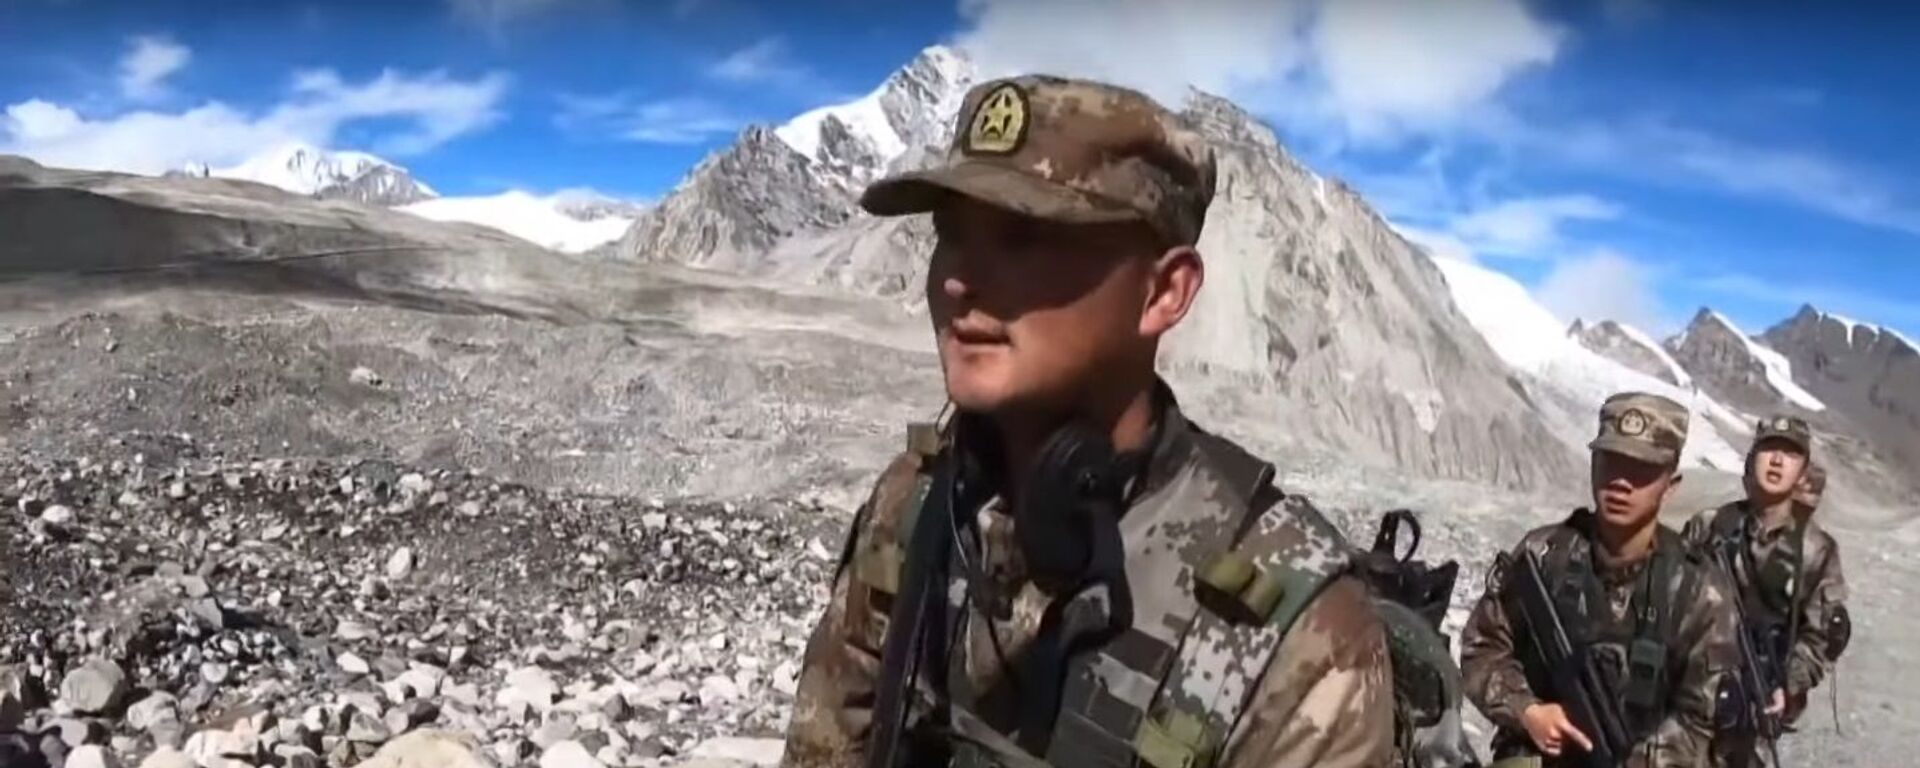  PLA soldiers patrol border on Himalayan mountain range in China’s Tibet autonomous region - Sputnik International, 1920, 19.10.2021